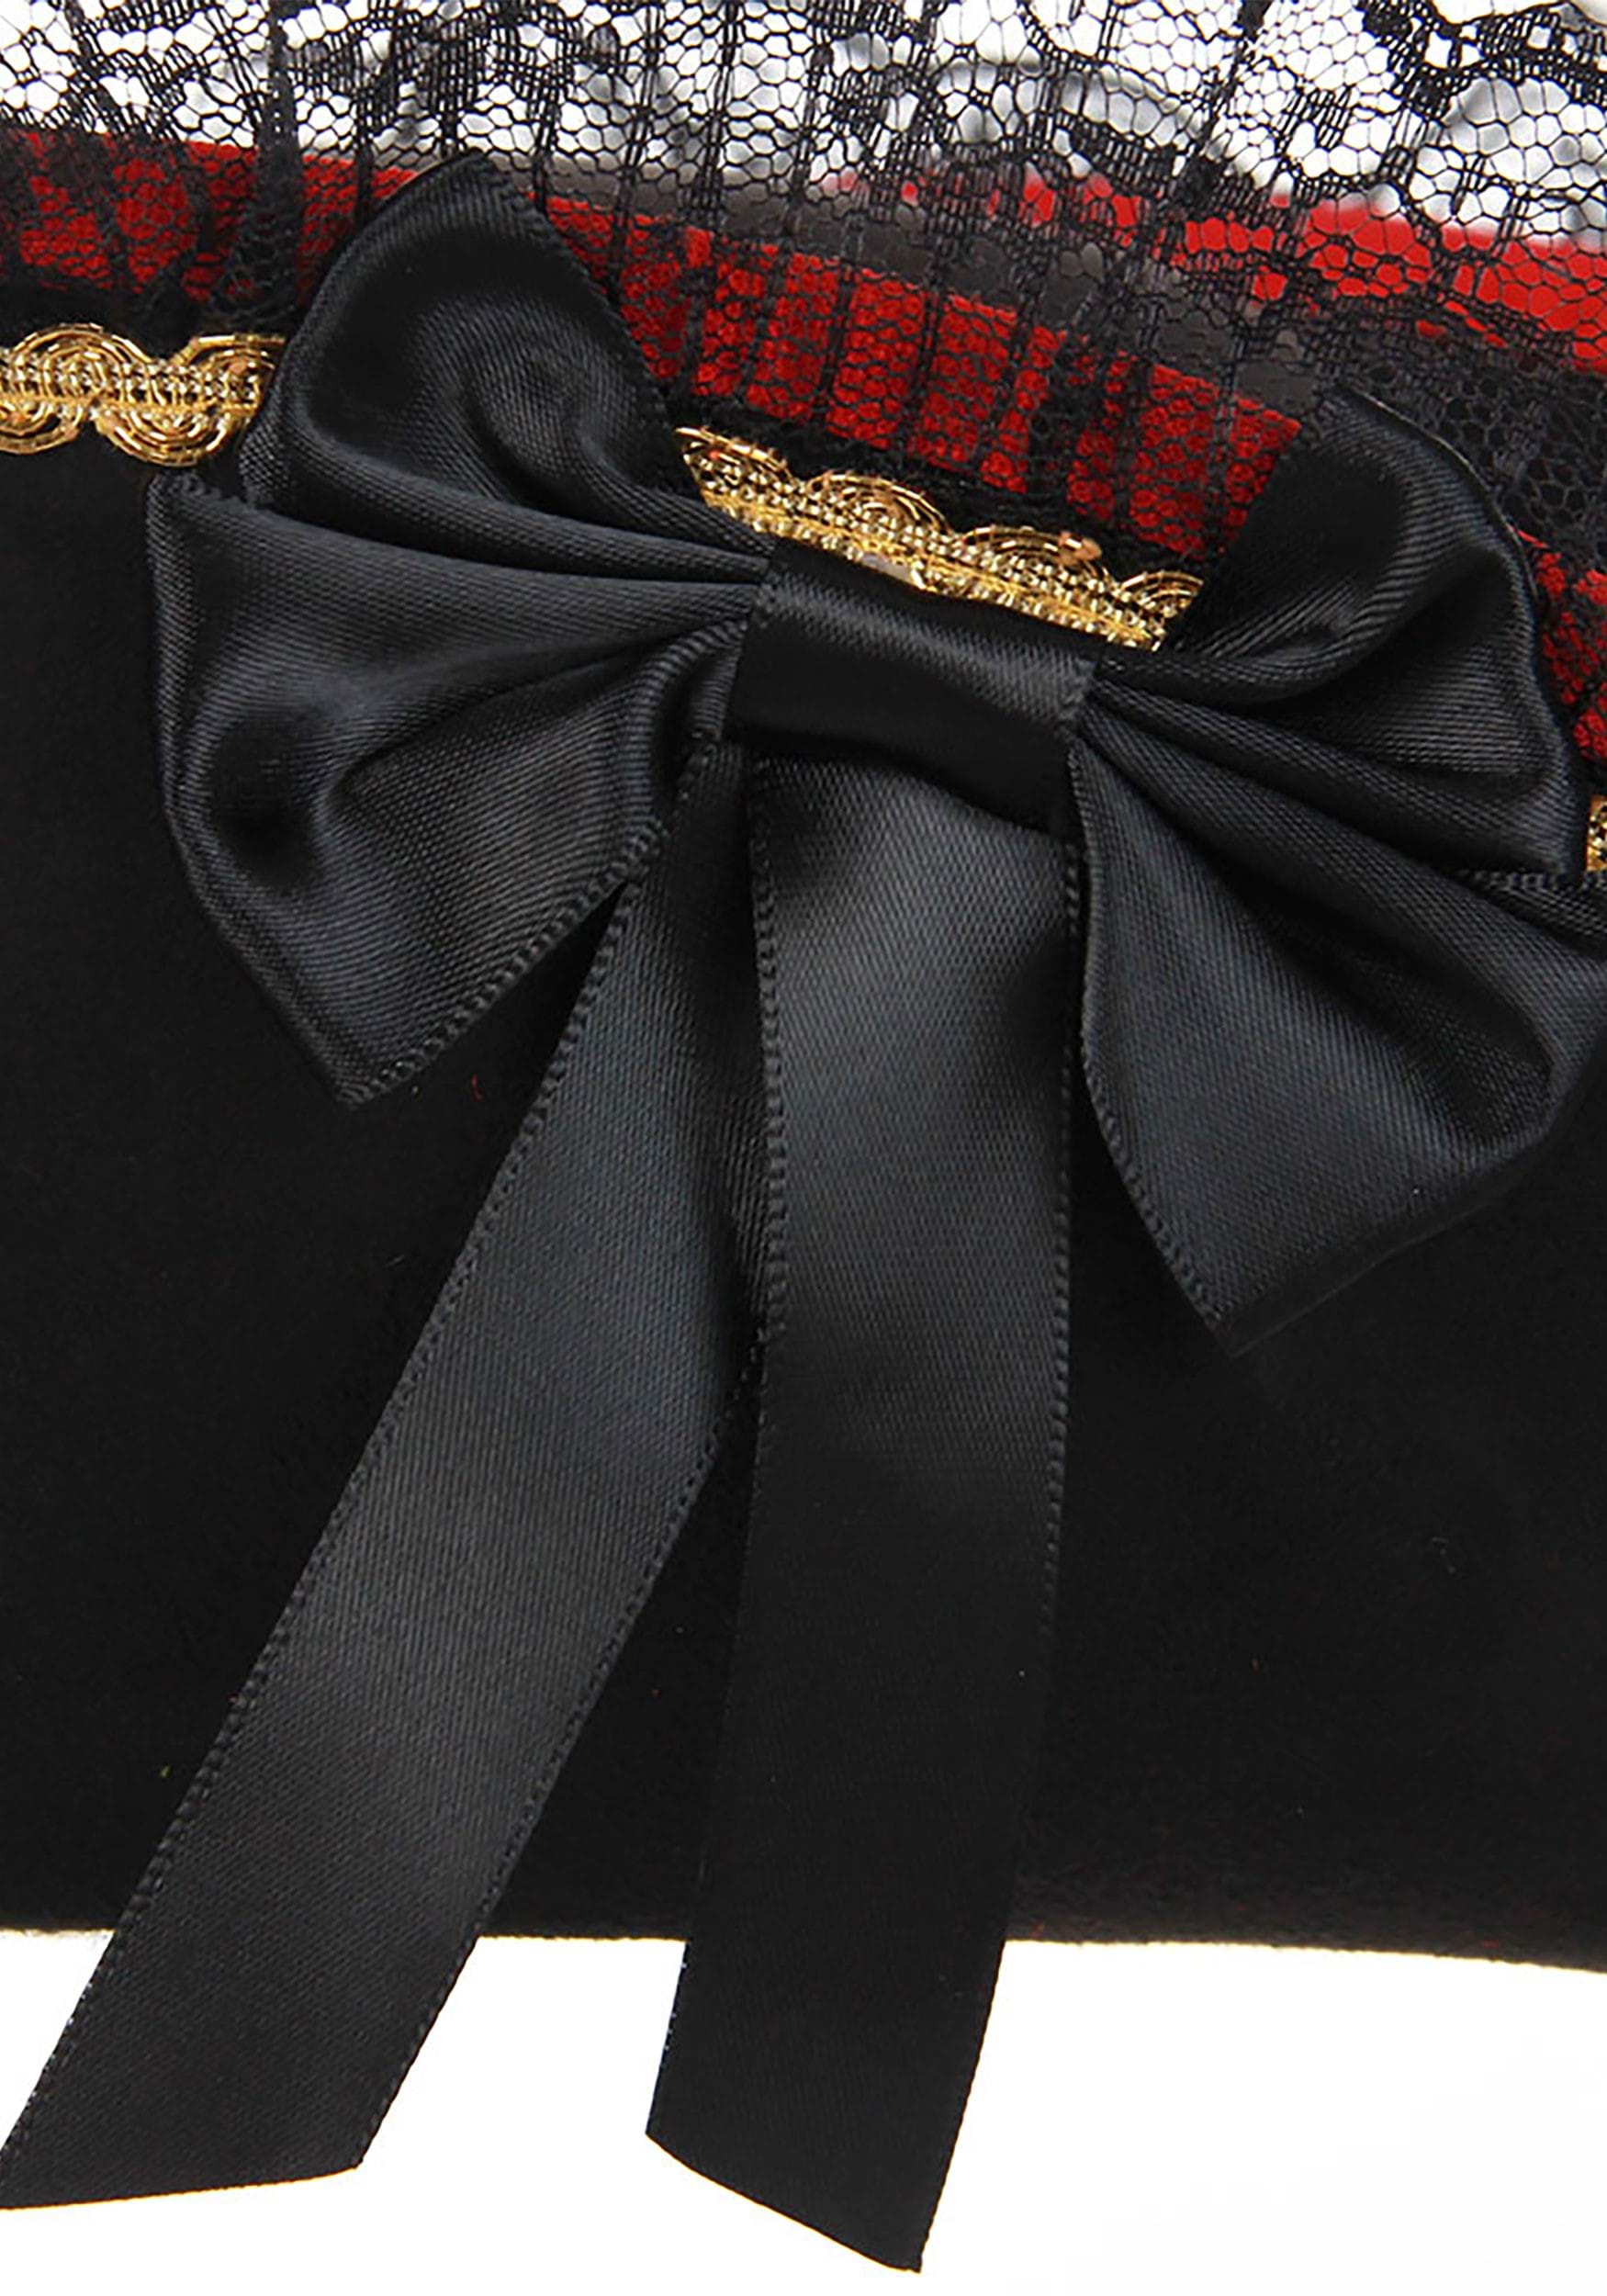 Lady Buccaneer Black Costume Hat Accessory